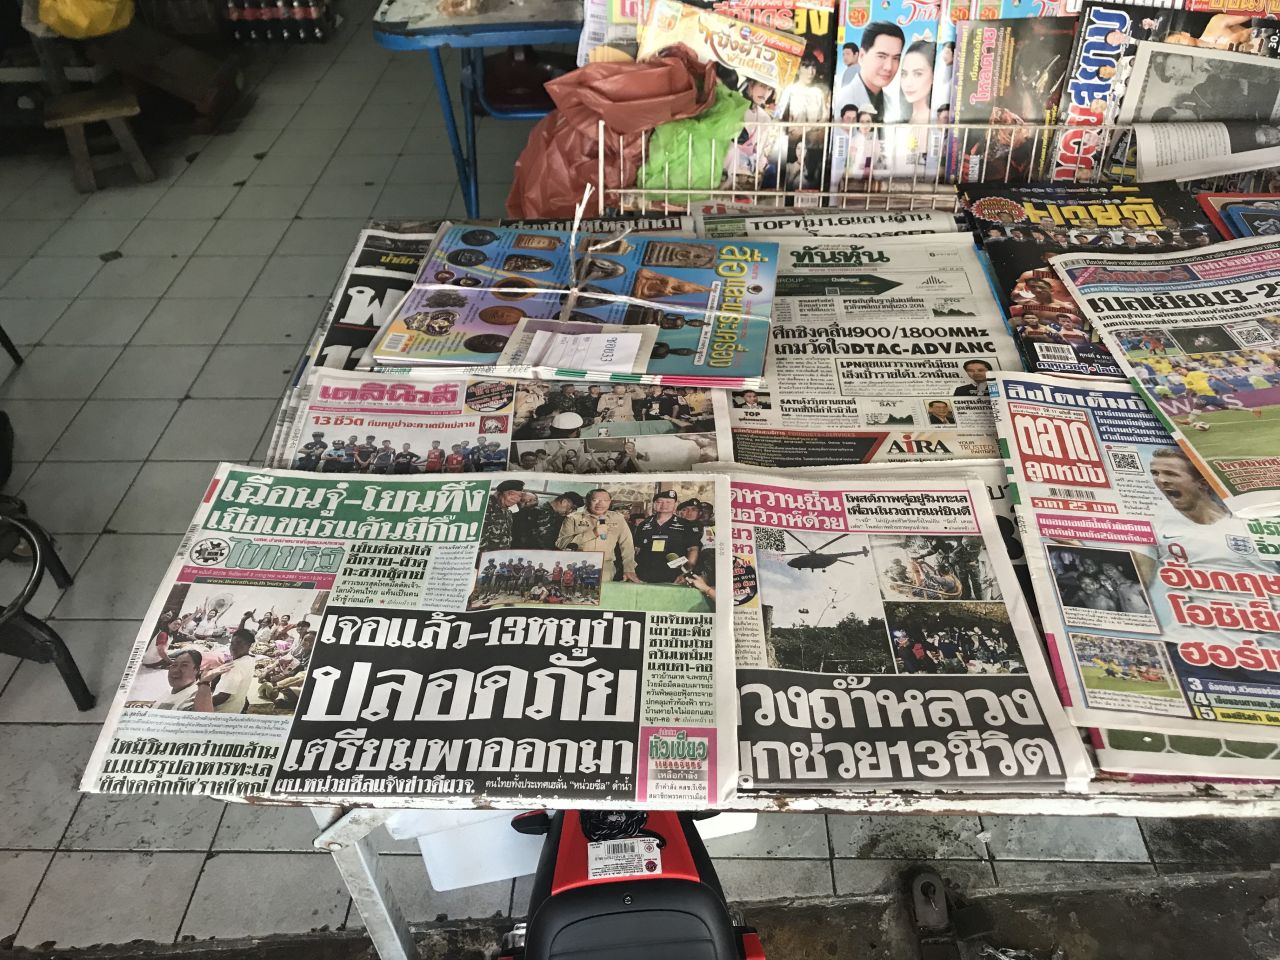 Thai-language newspapers in Bangkok on Tuesday.